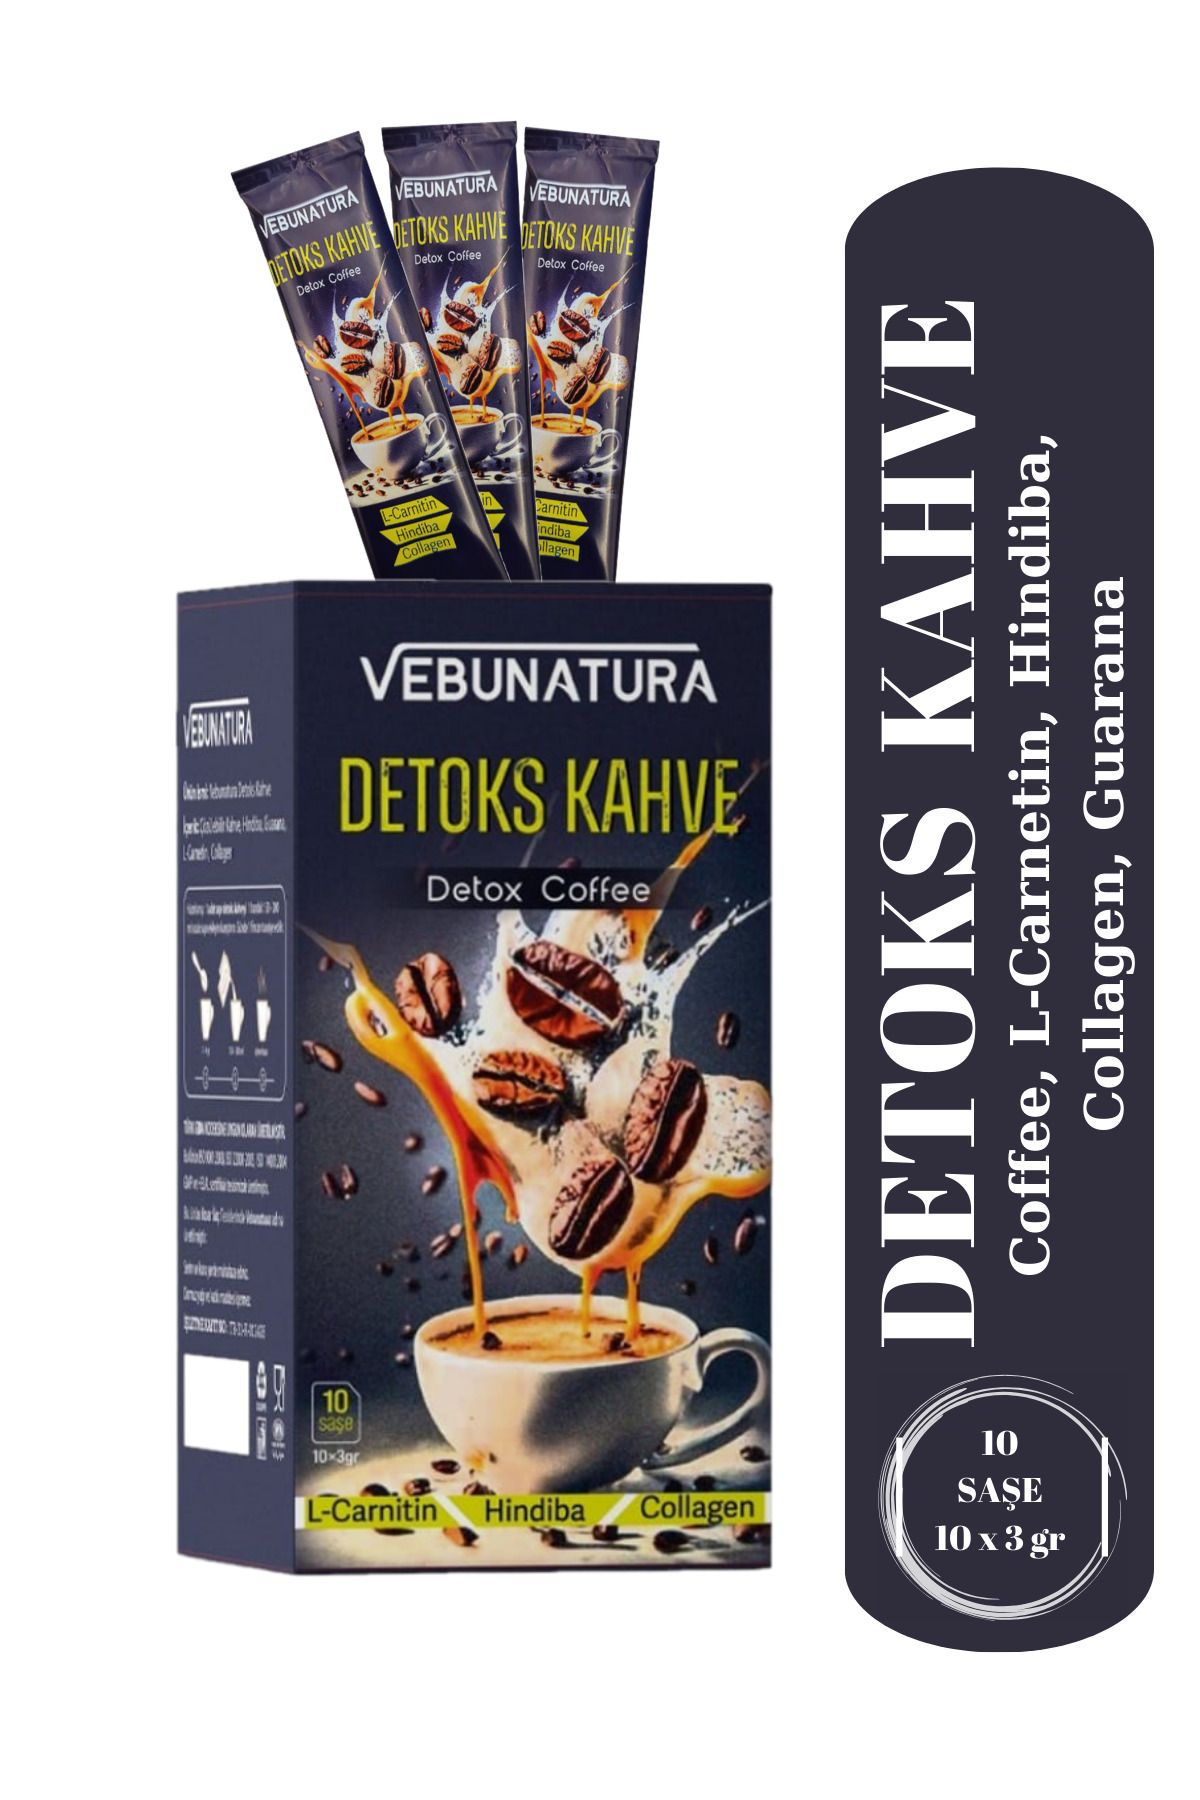 VEBUNATURA Detox Kahve (Hindiba, L-Carnitin, Collagen İçren Detoks Etkili Diyet Kahve